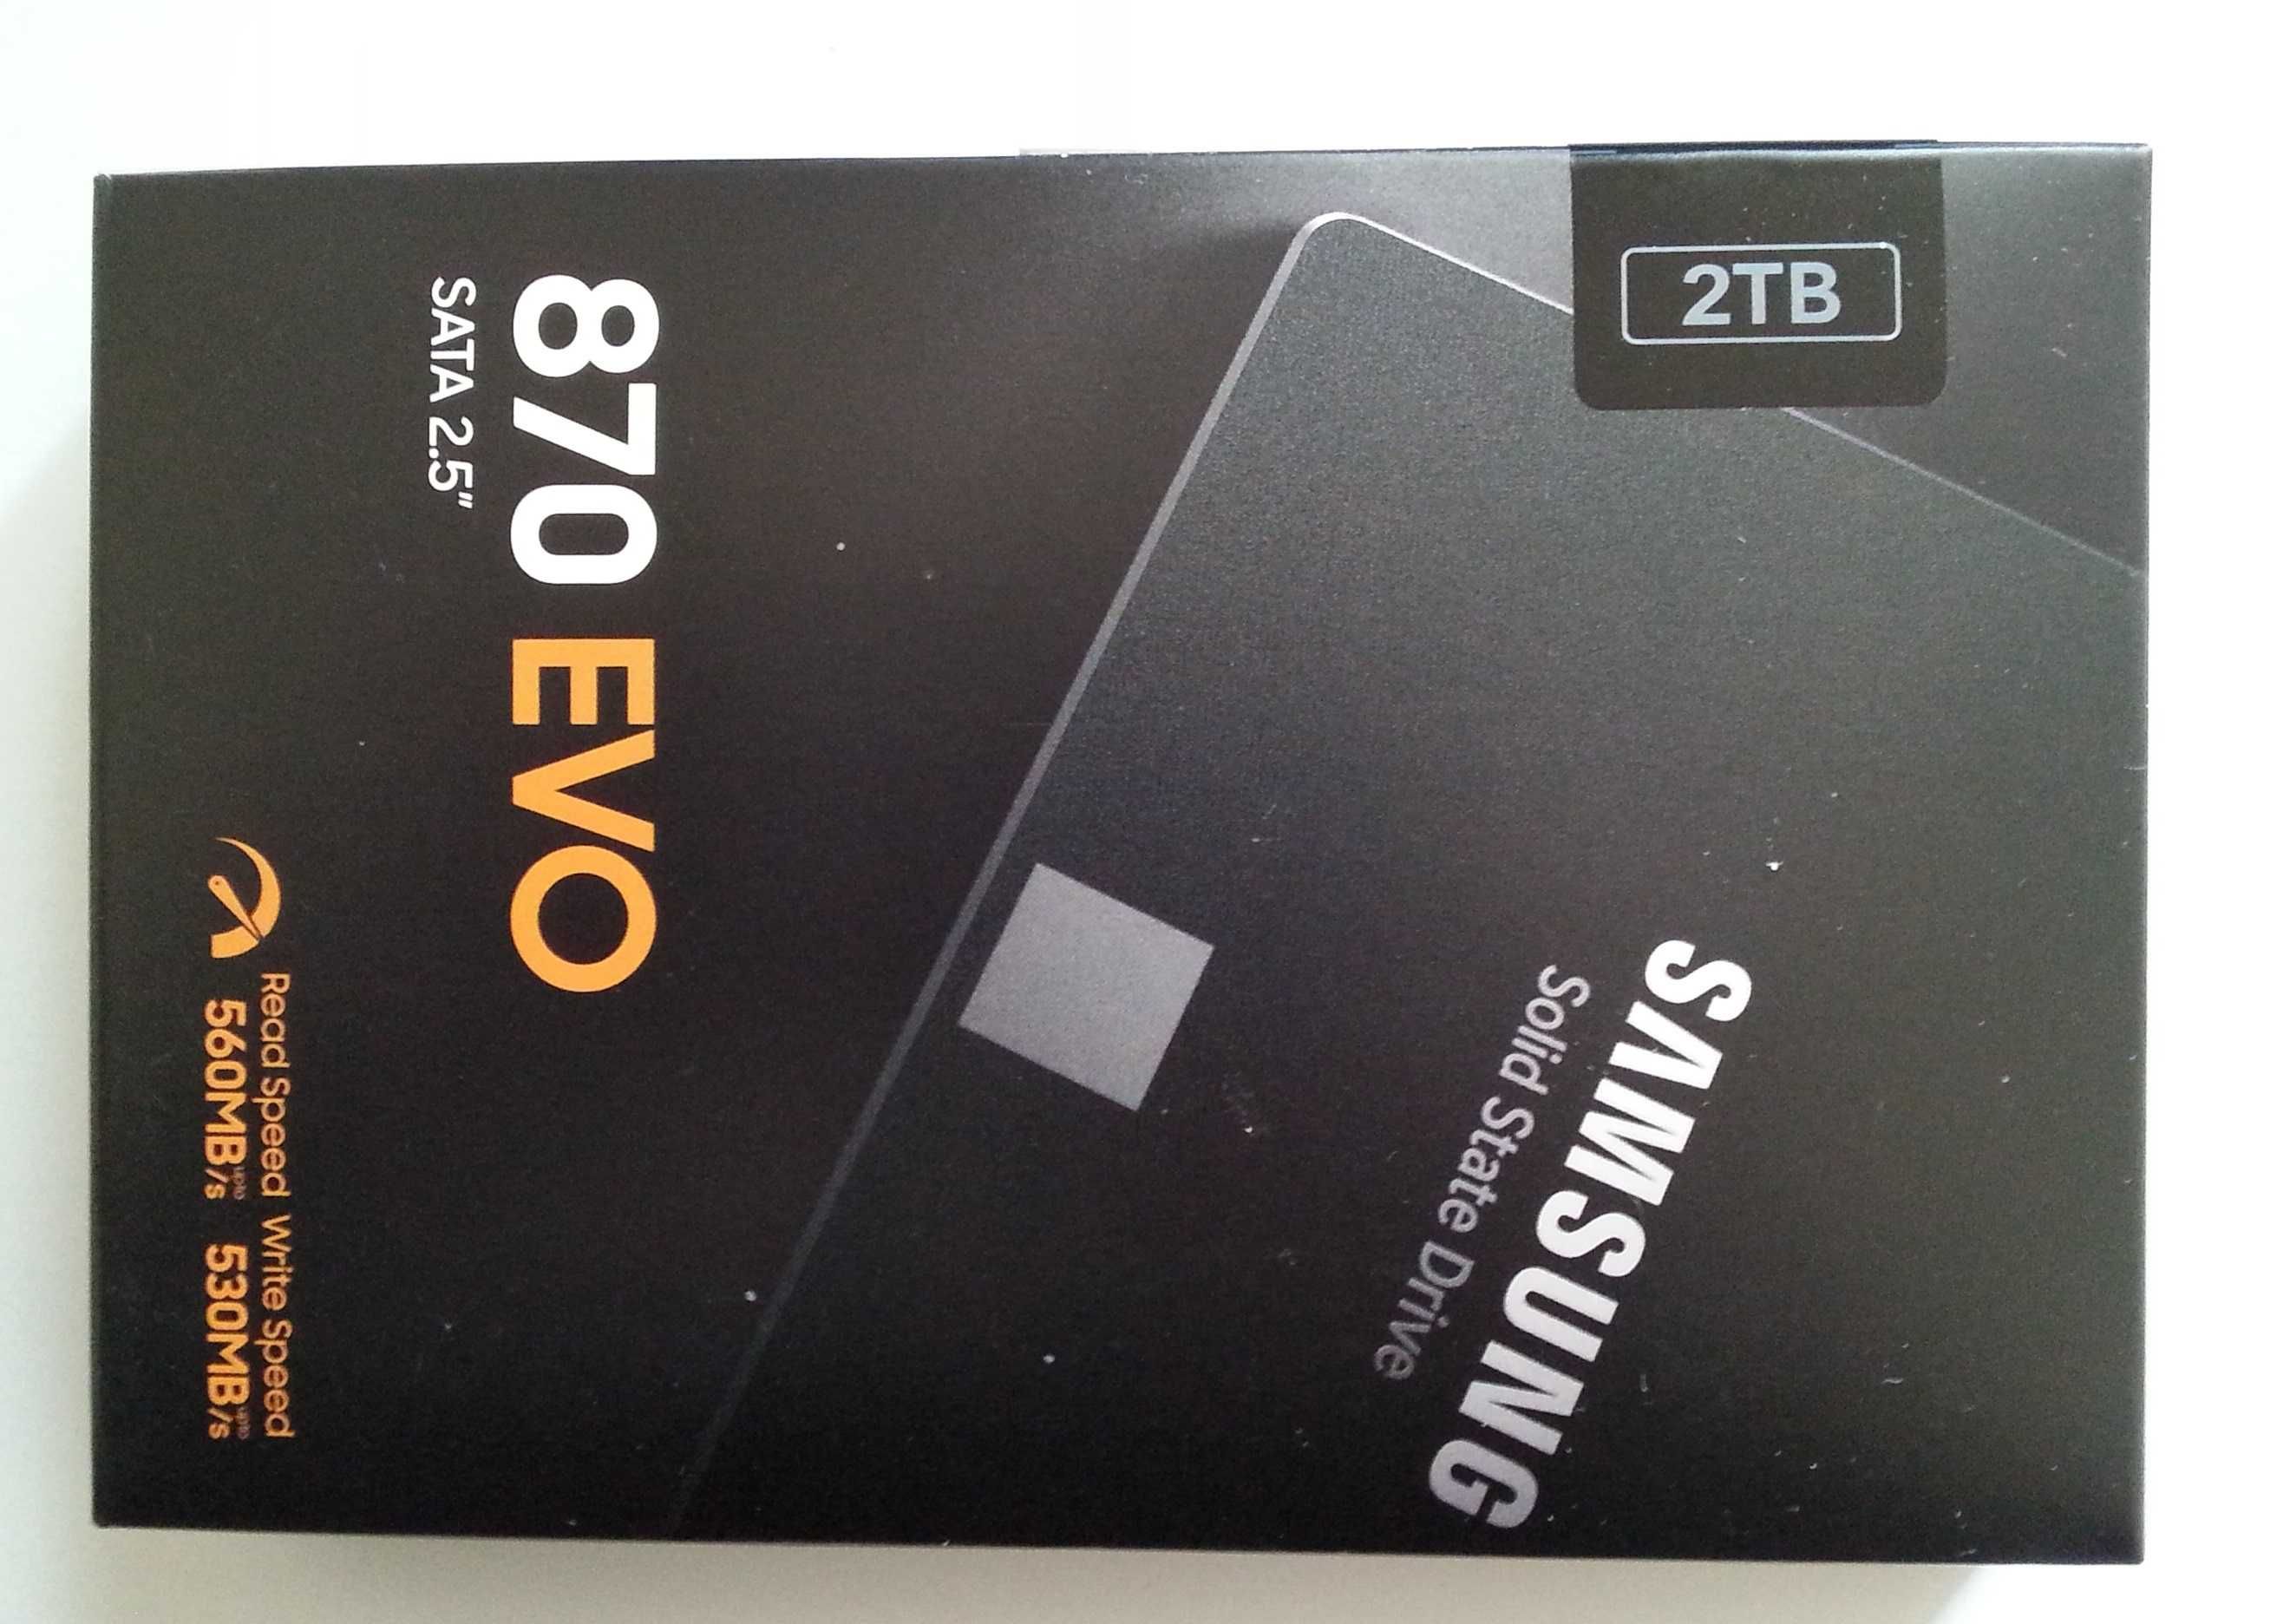 Nowy Samsung,1tb-860 evo.Inne modele foto